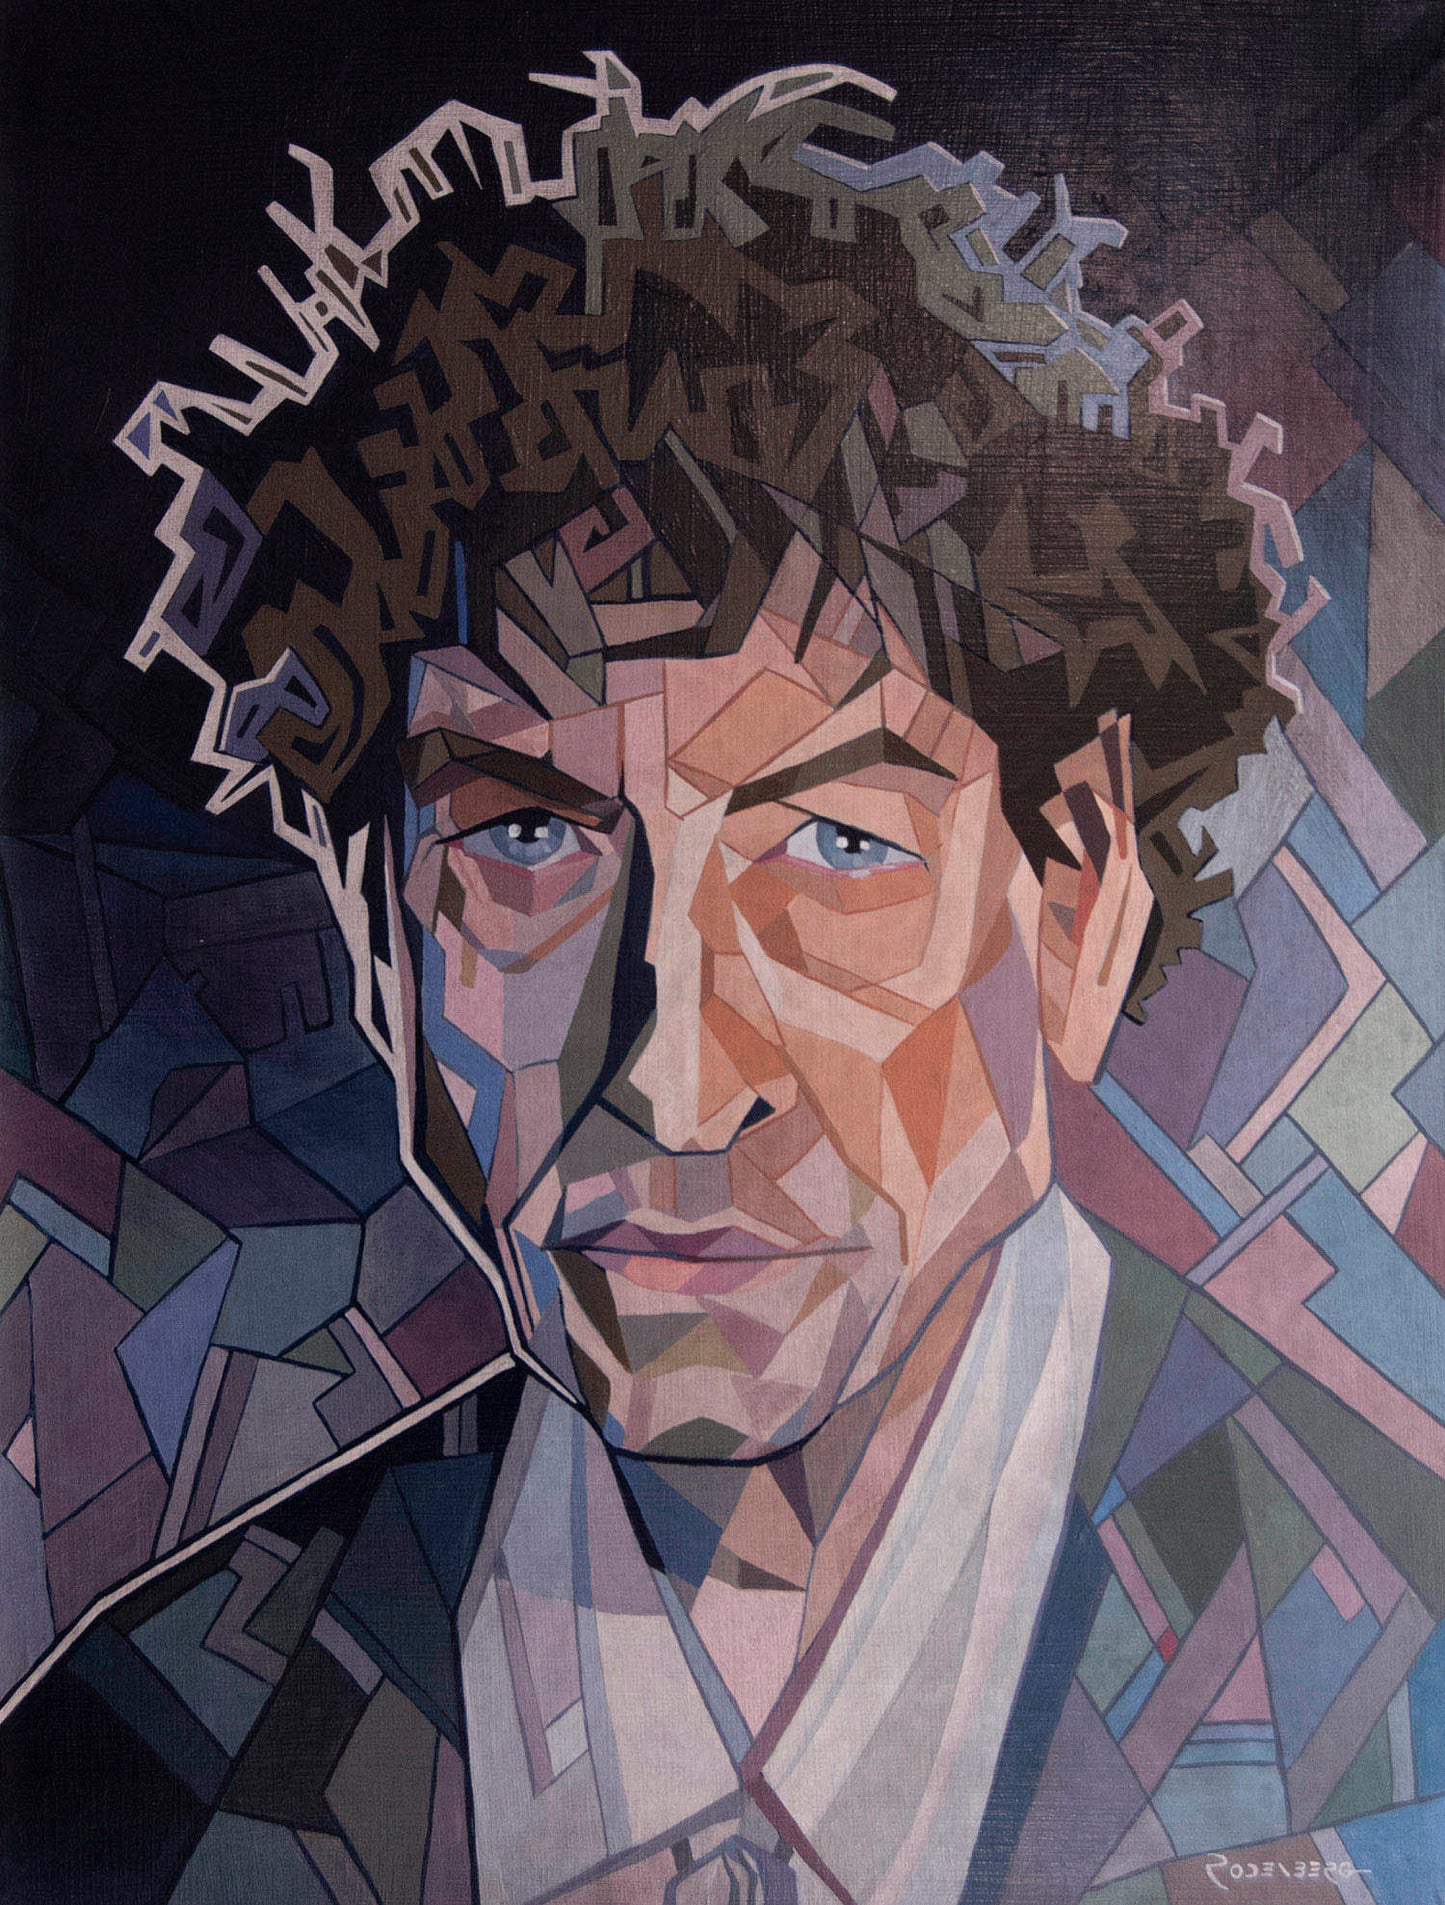  Bob Dylan portrait painting art by Jeff Rodenberg